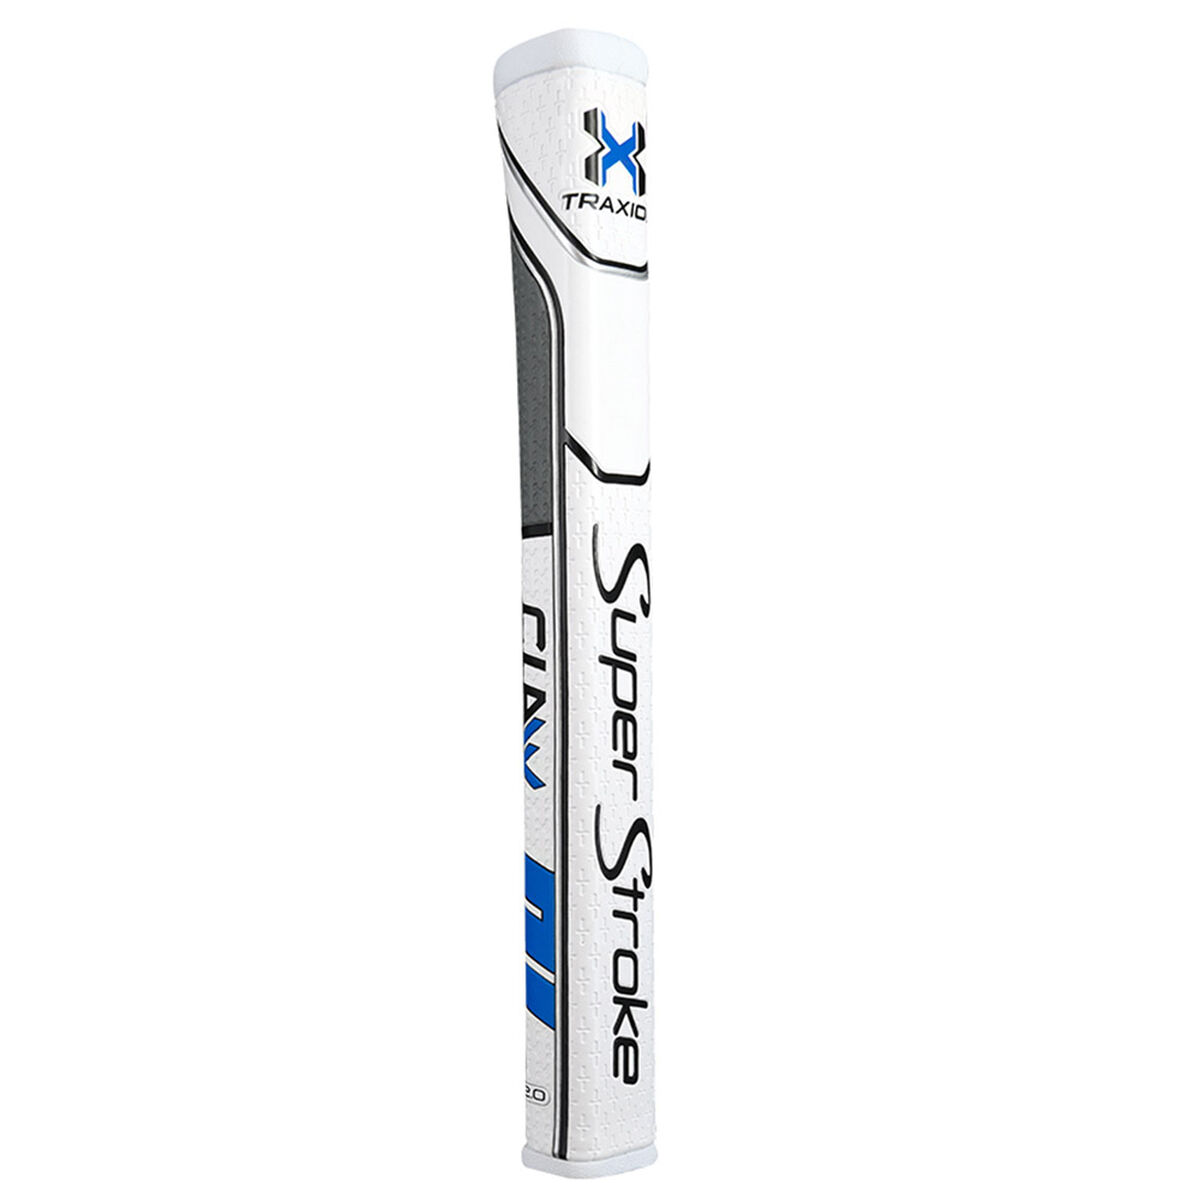 Poignée de Golf Putter SuperStroke Traxion Claw 1.0, homme, Blanc/Bleu/Gris | Online Golf